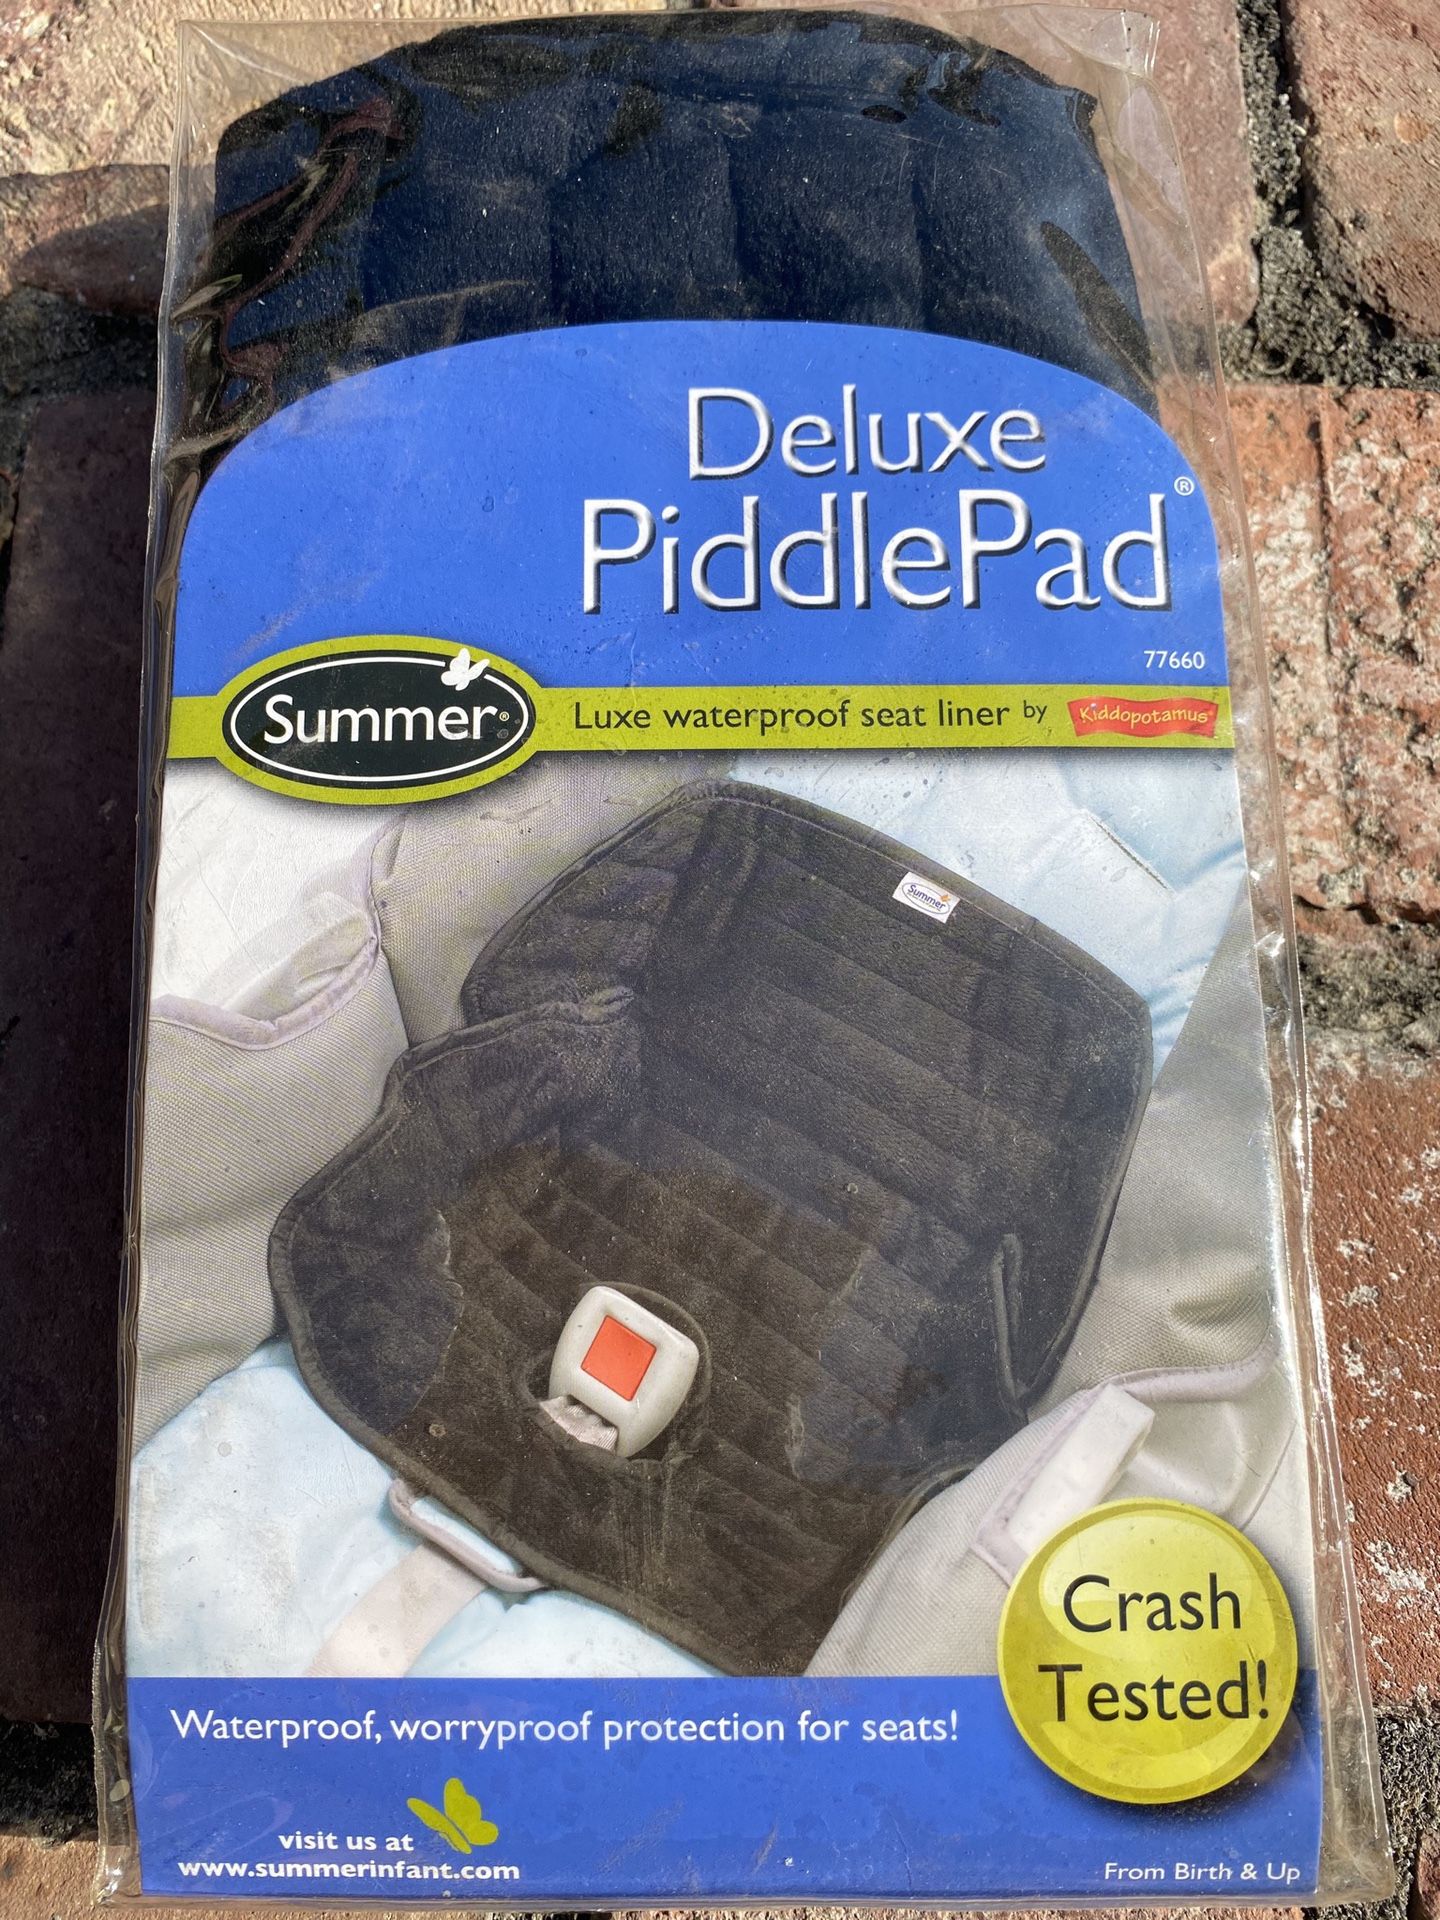 Deluxe piddle pad, waterproof seat liner